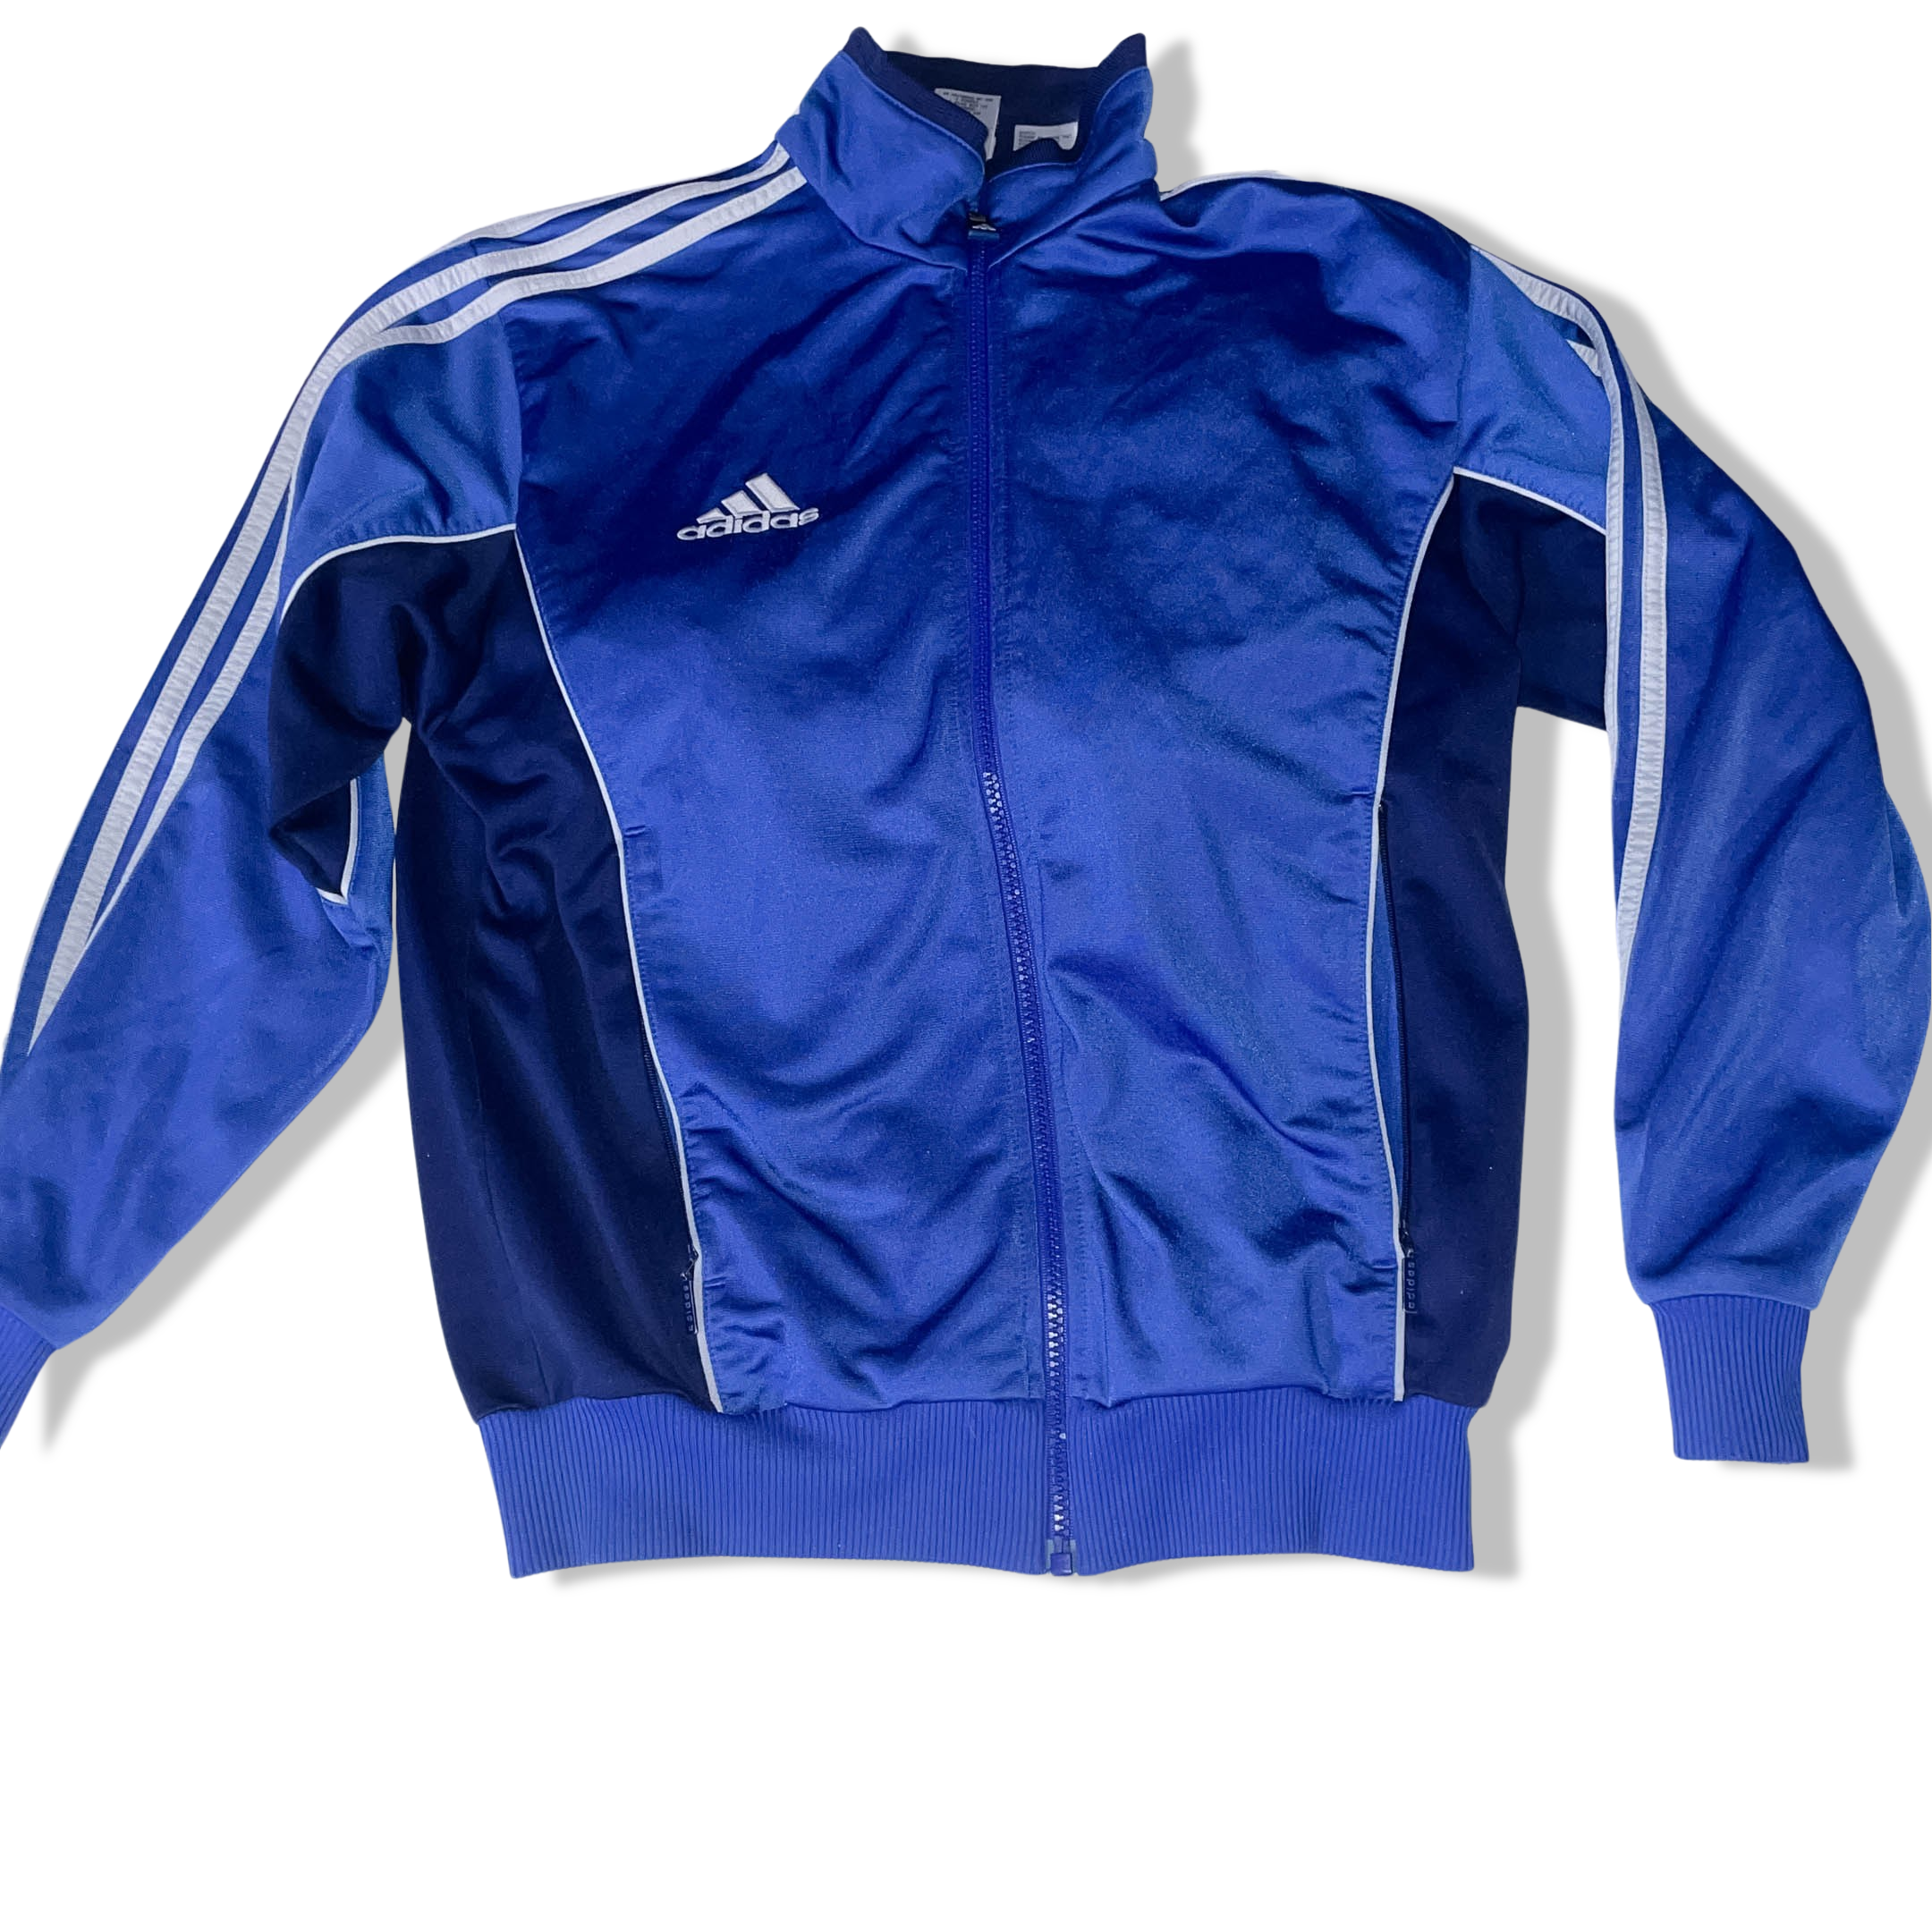 Vintage 90's Adidas windbreaker blue sport large womens jacket